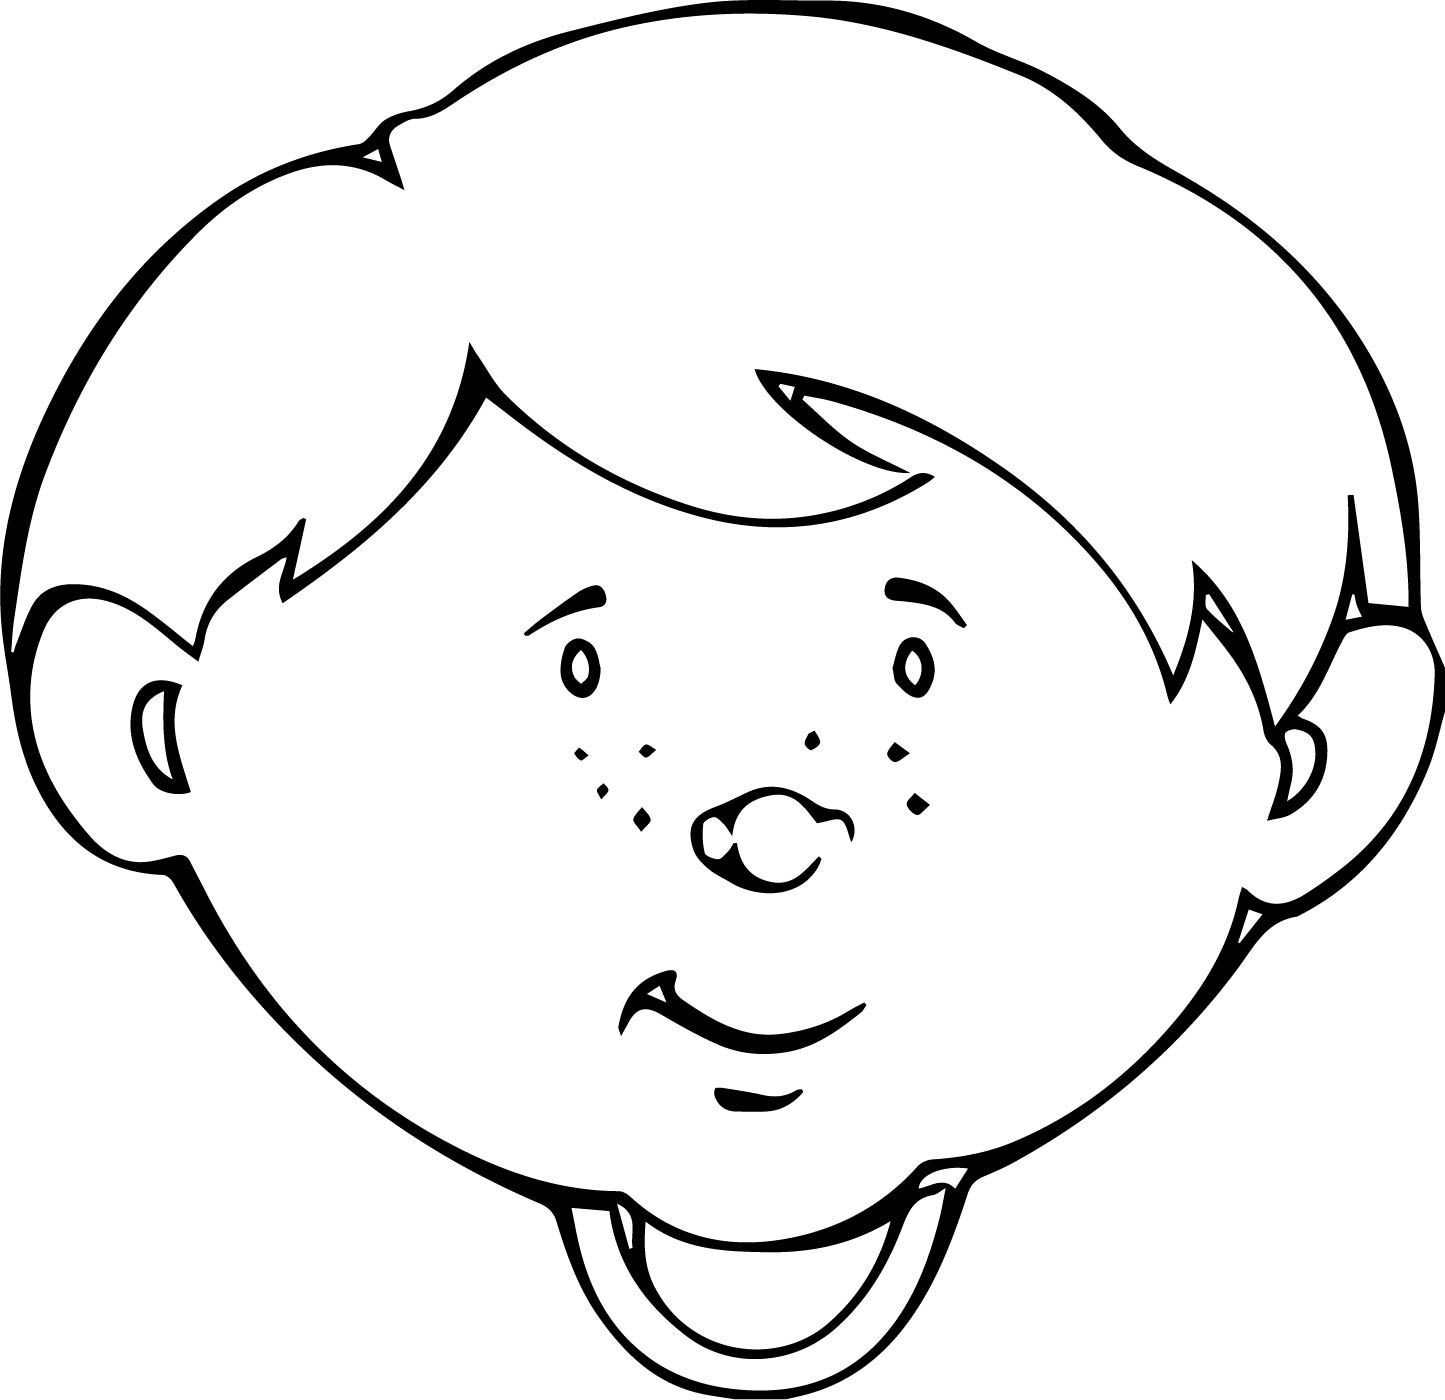 gambar sketsa wajah anak kecil